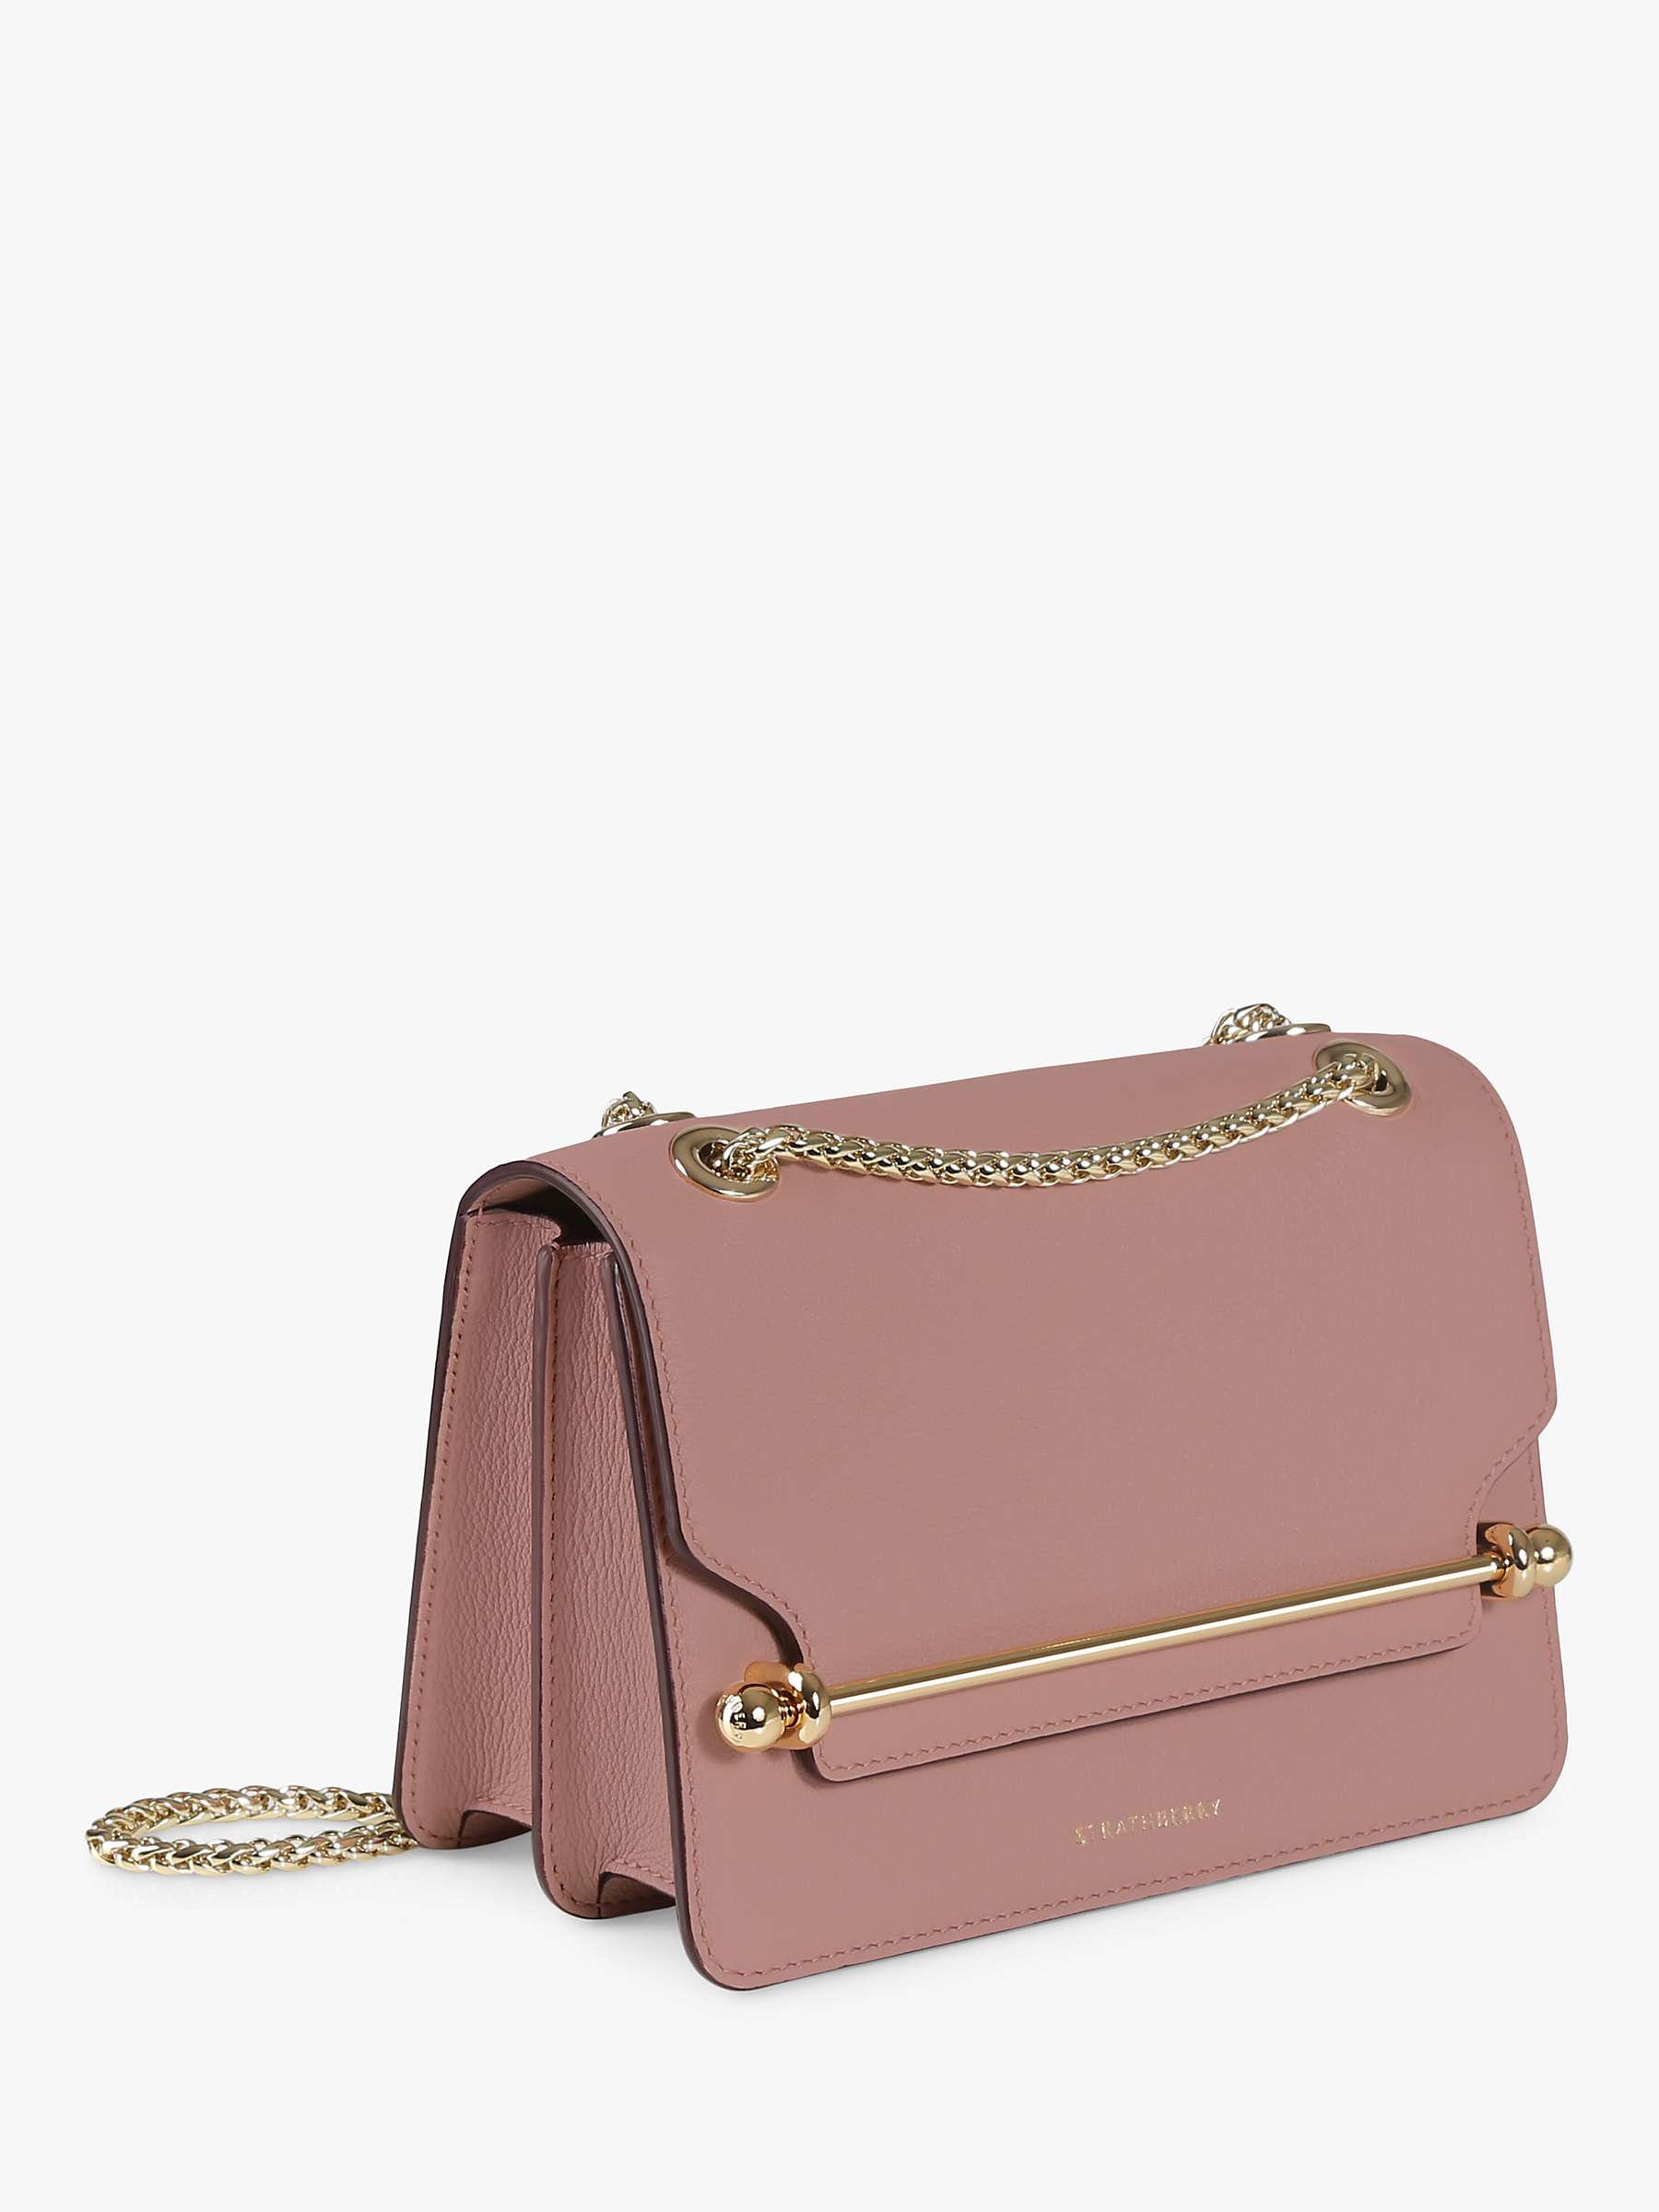 Strathberry - East/West Mini - Crossbody Leather Mini Handbag - Pink